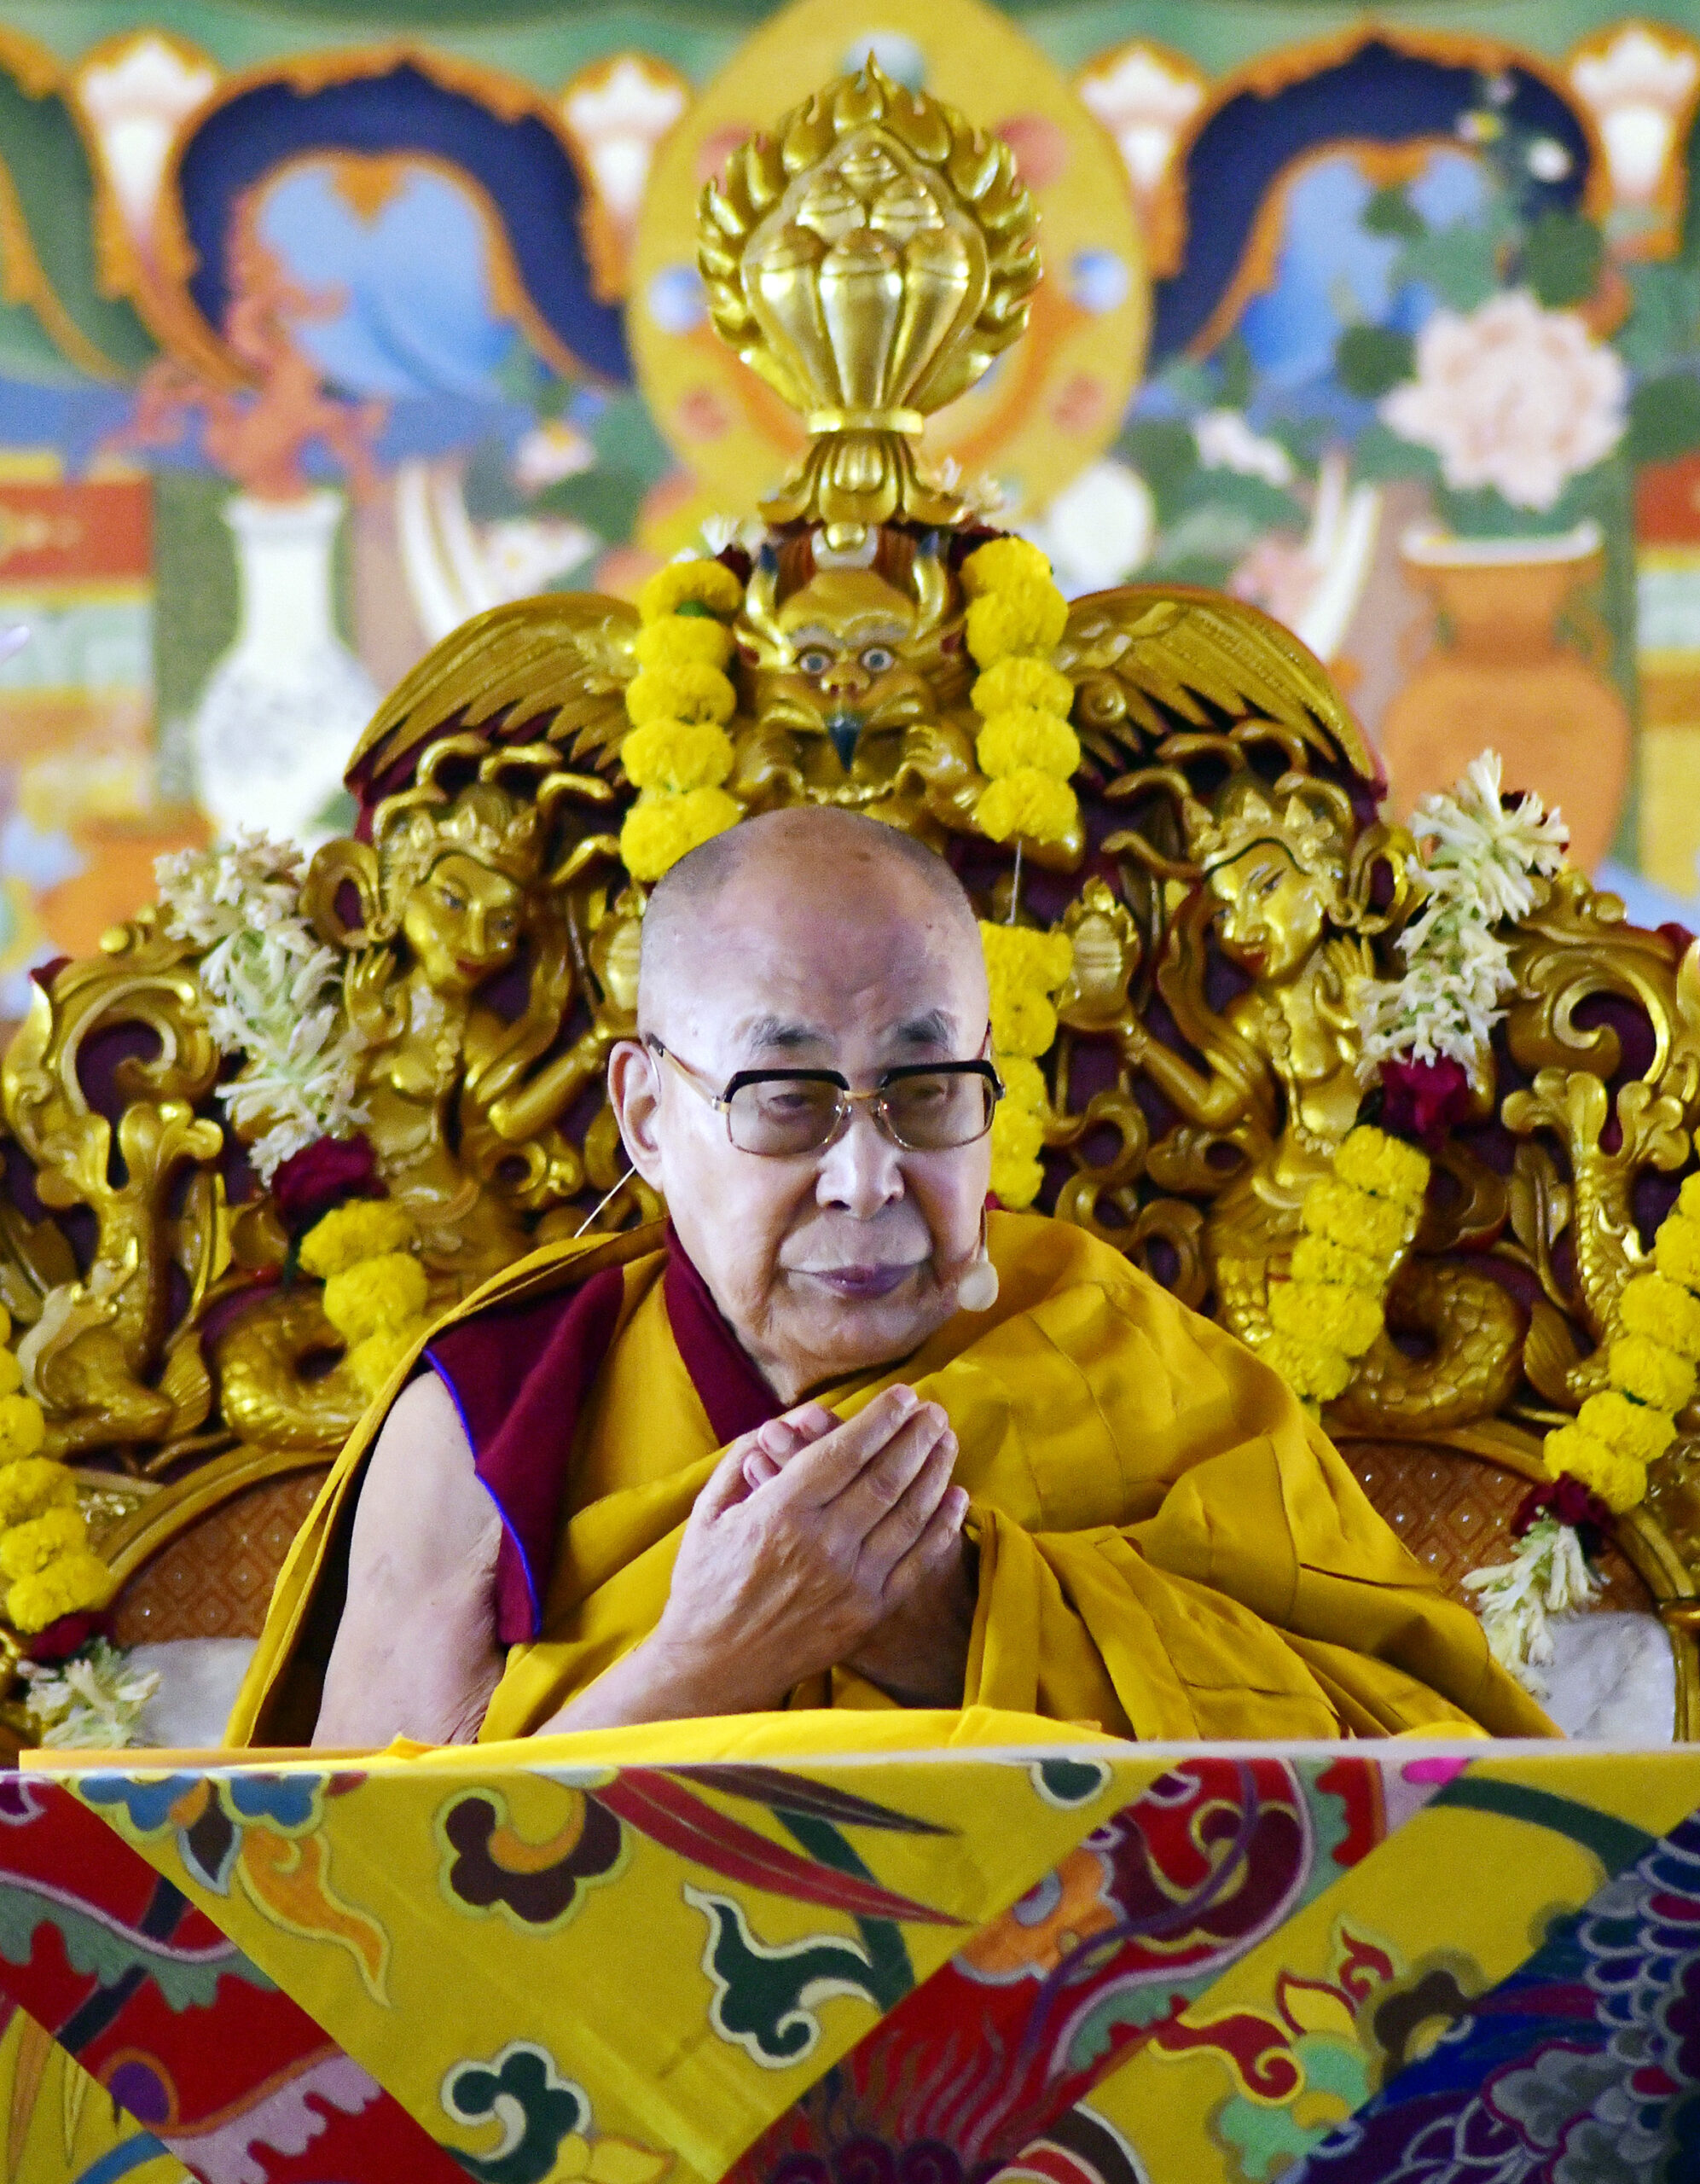 There’s need to contribute more for Tibetan people, says Kiren Rijiju